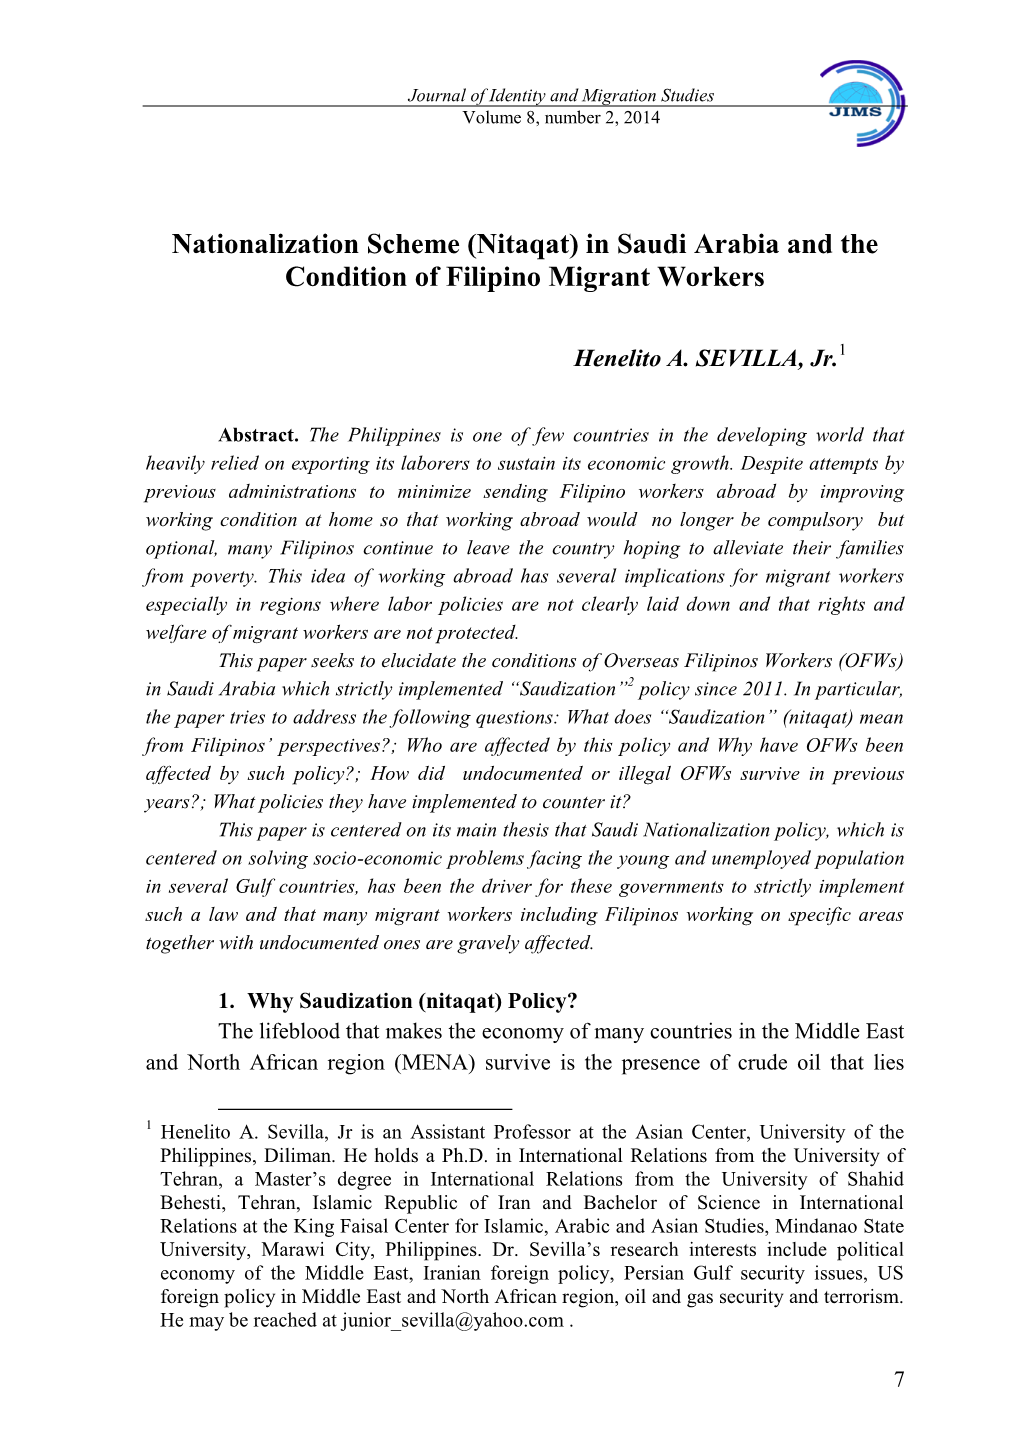 (Nitaqat) in Saudi Arabia and the Condition of Filipino Migrant Workers